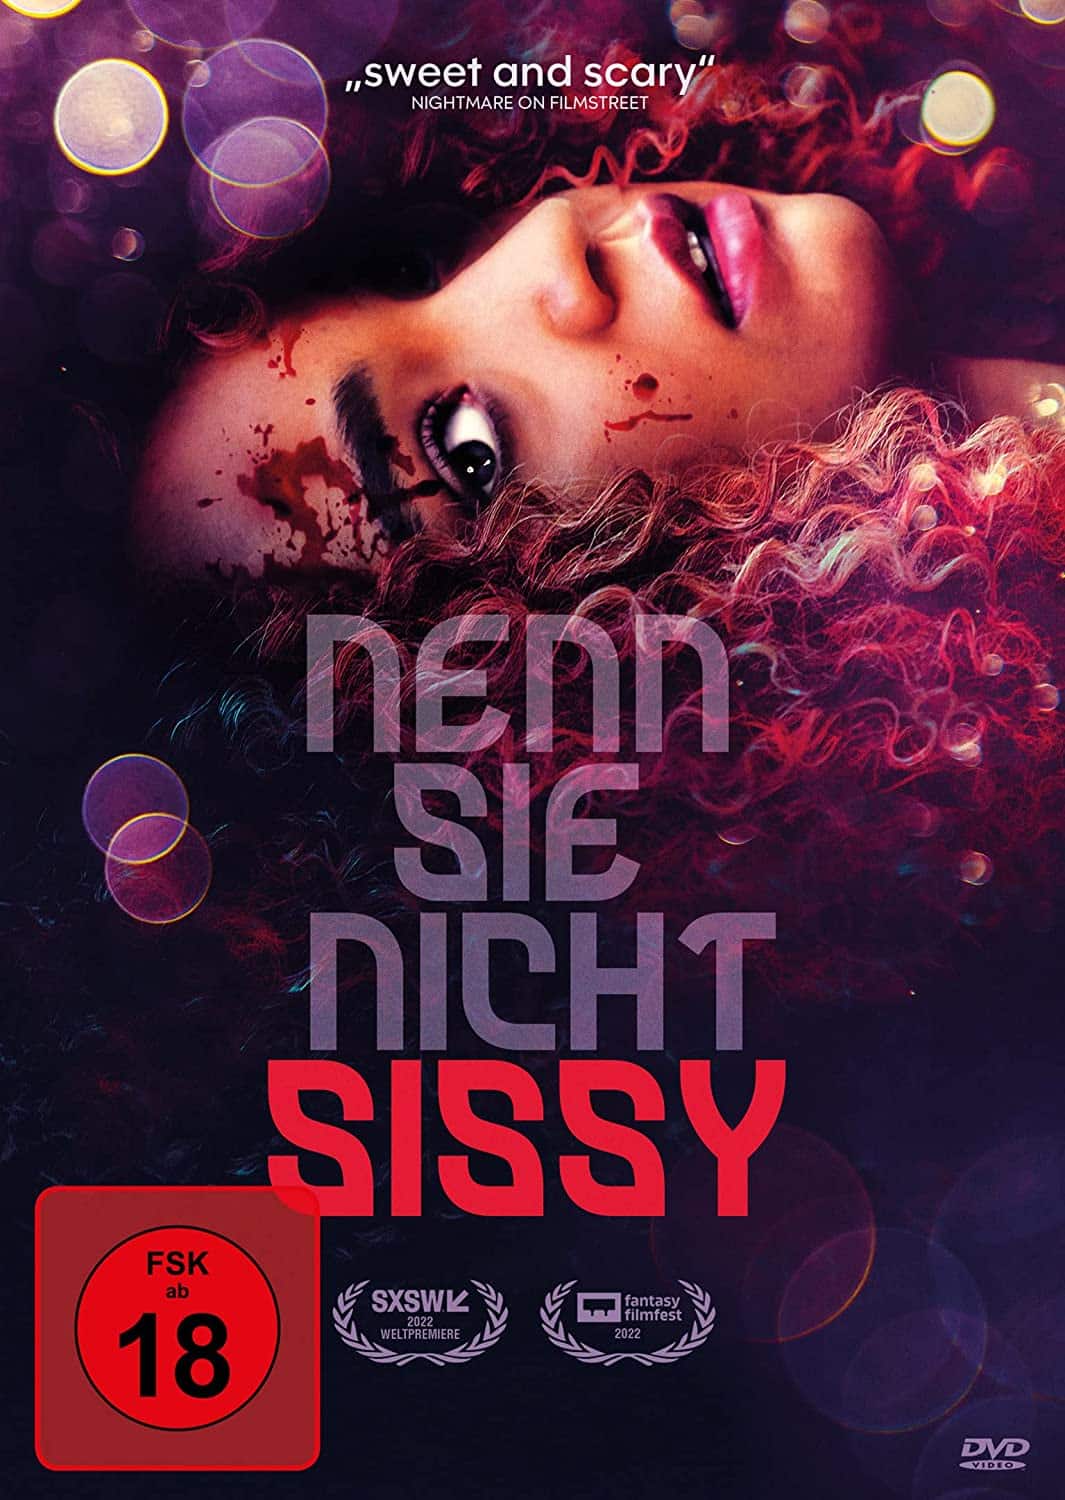 Sissy - Dvd Cover